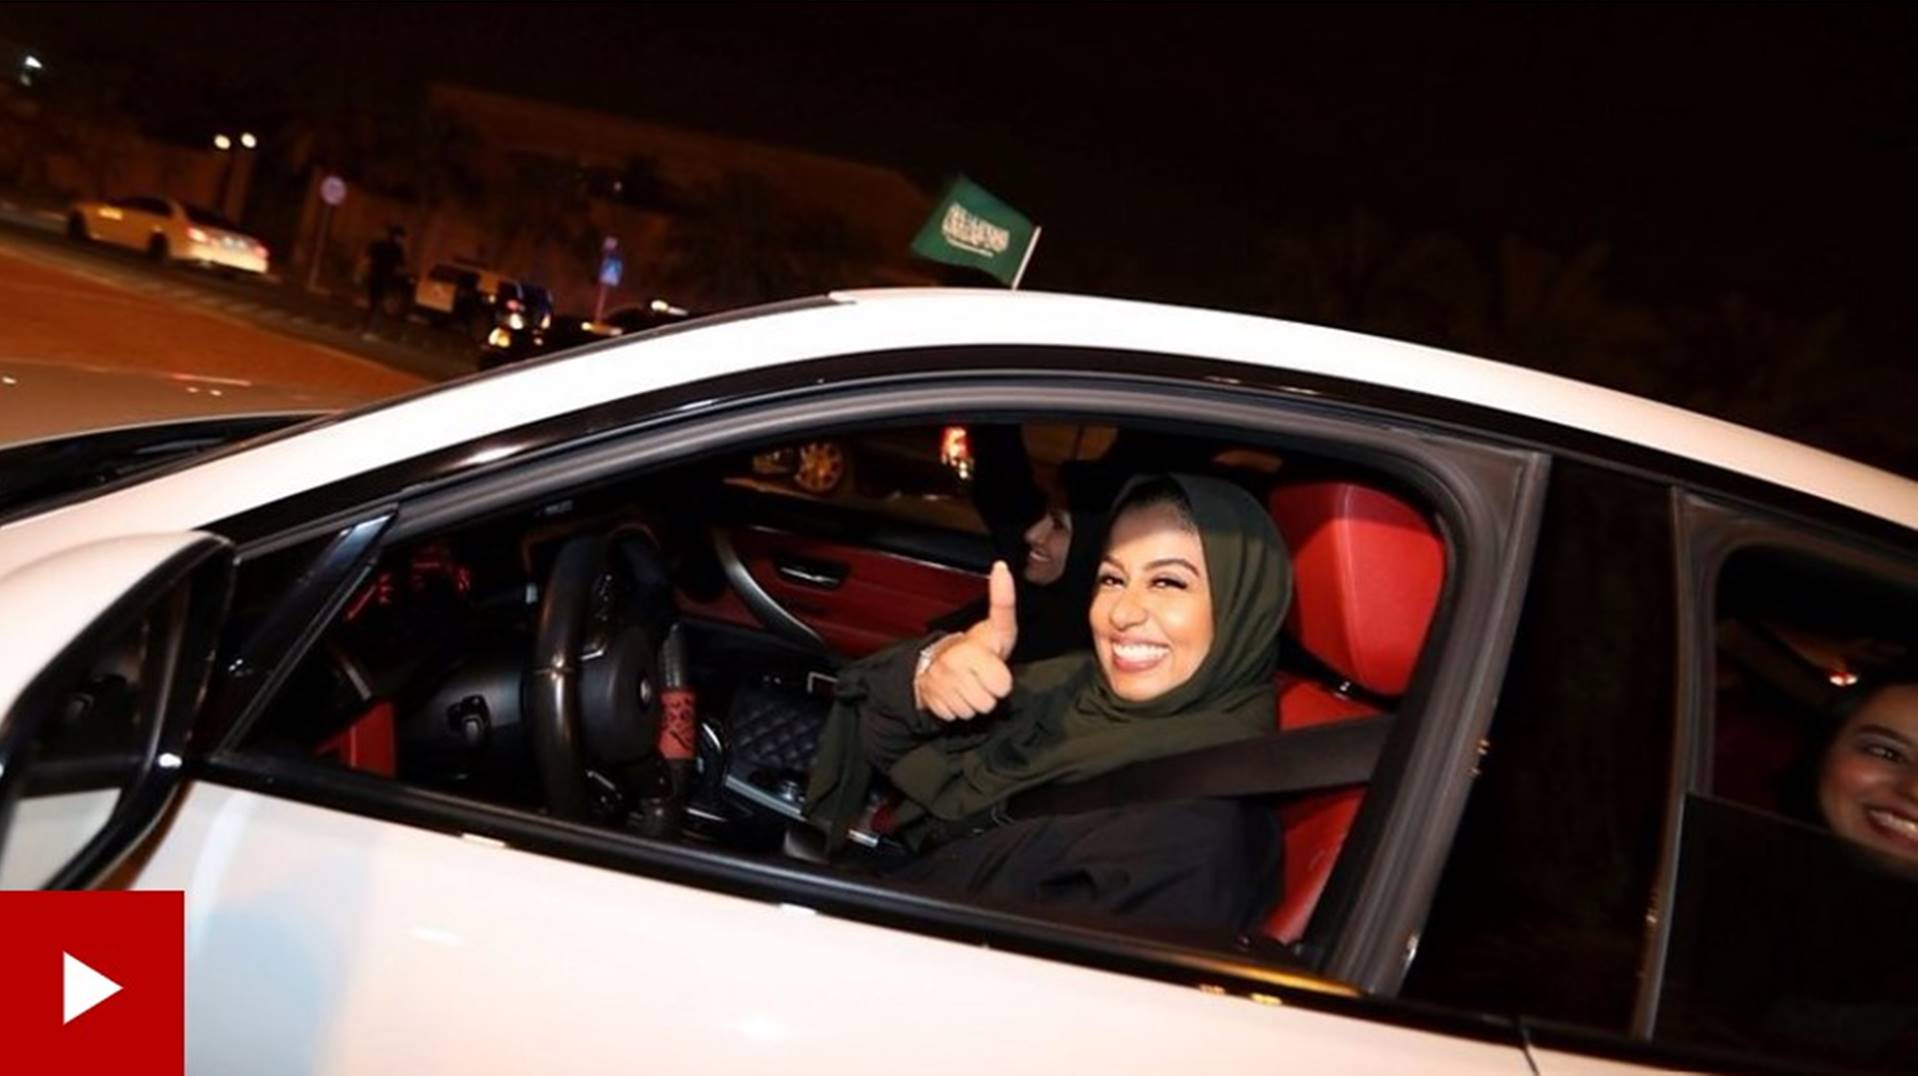 Saudi Arabia: 28.000 women apply for 30 train driver jobs